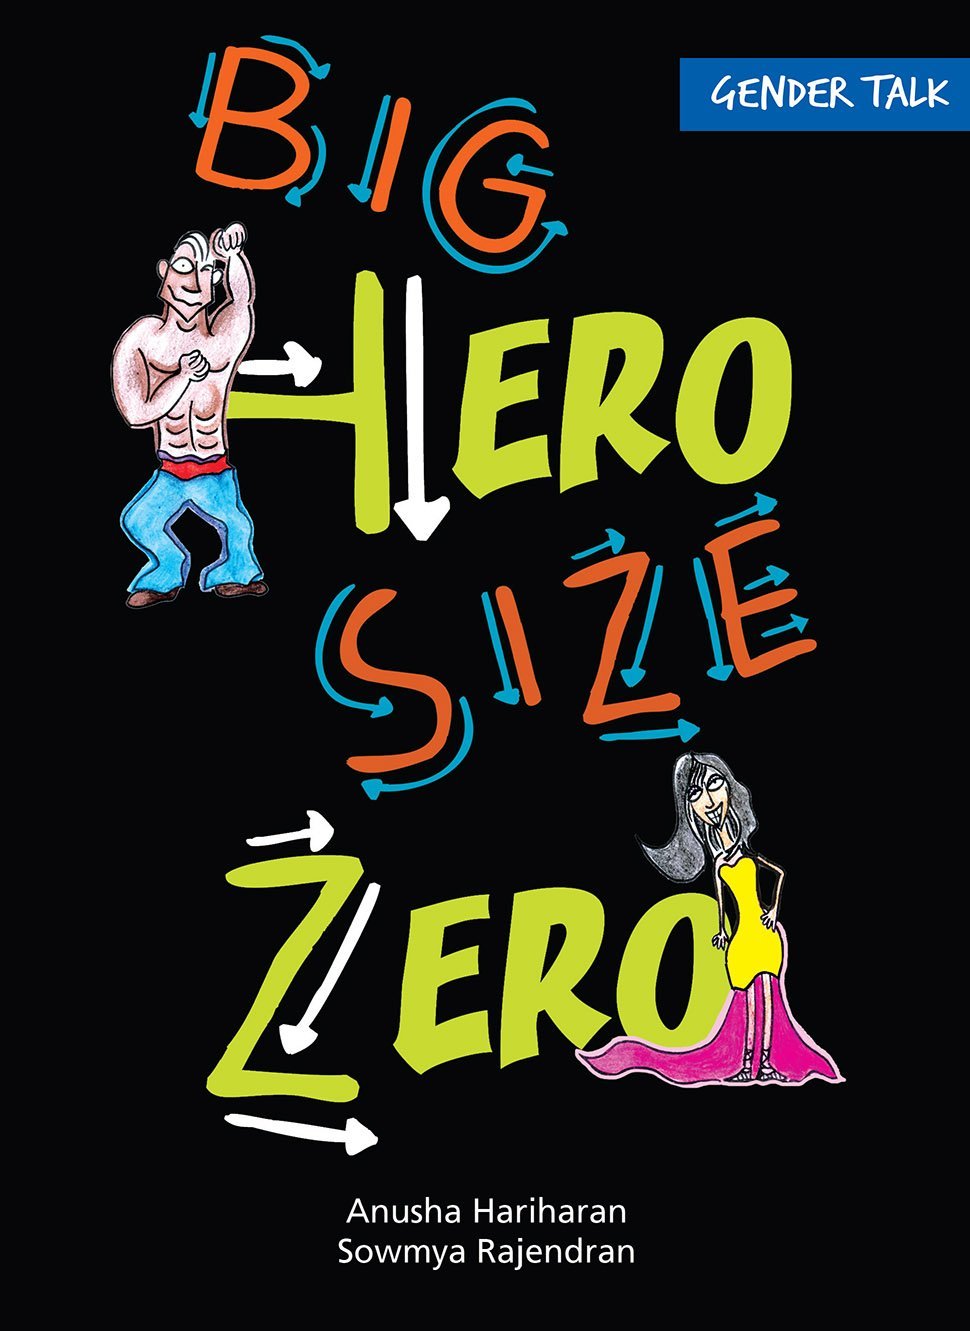 Gender Talk - Big Hero Size Zero